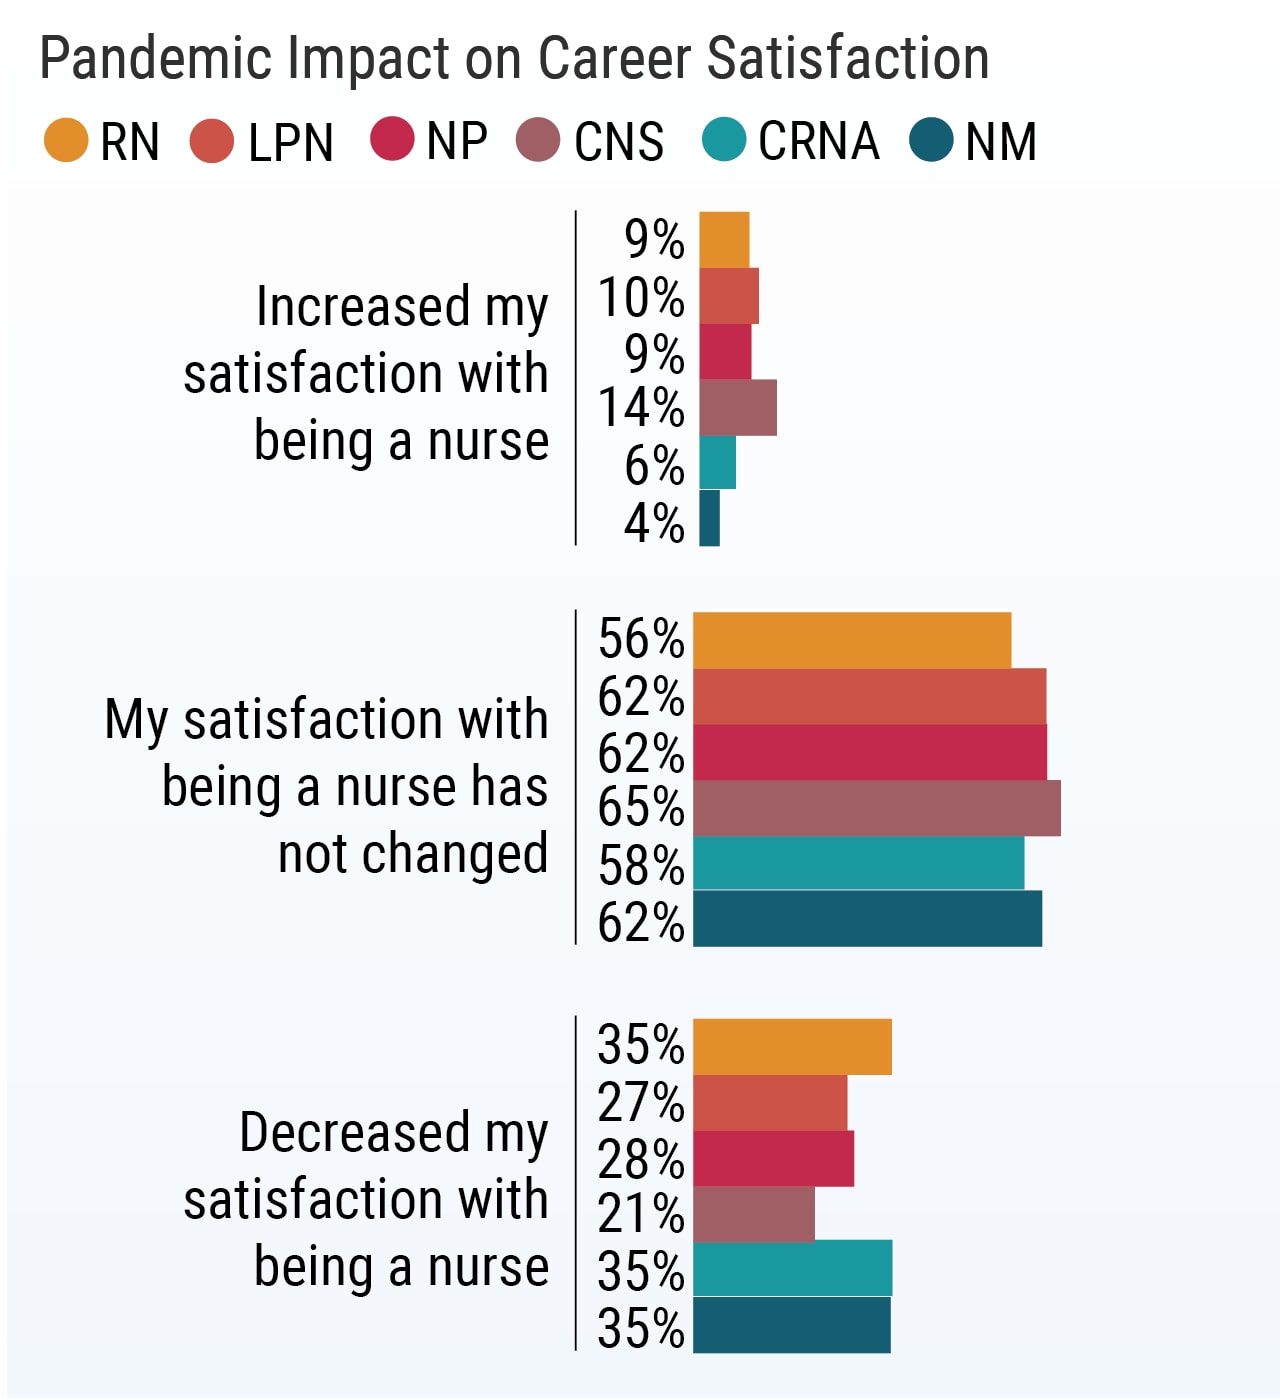 research on nurses' job satisfaction